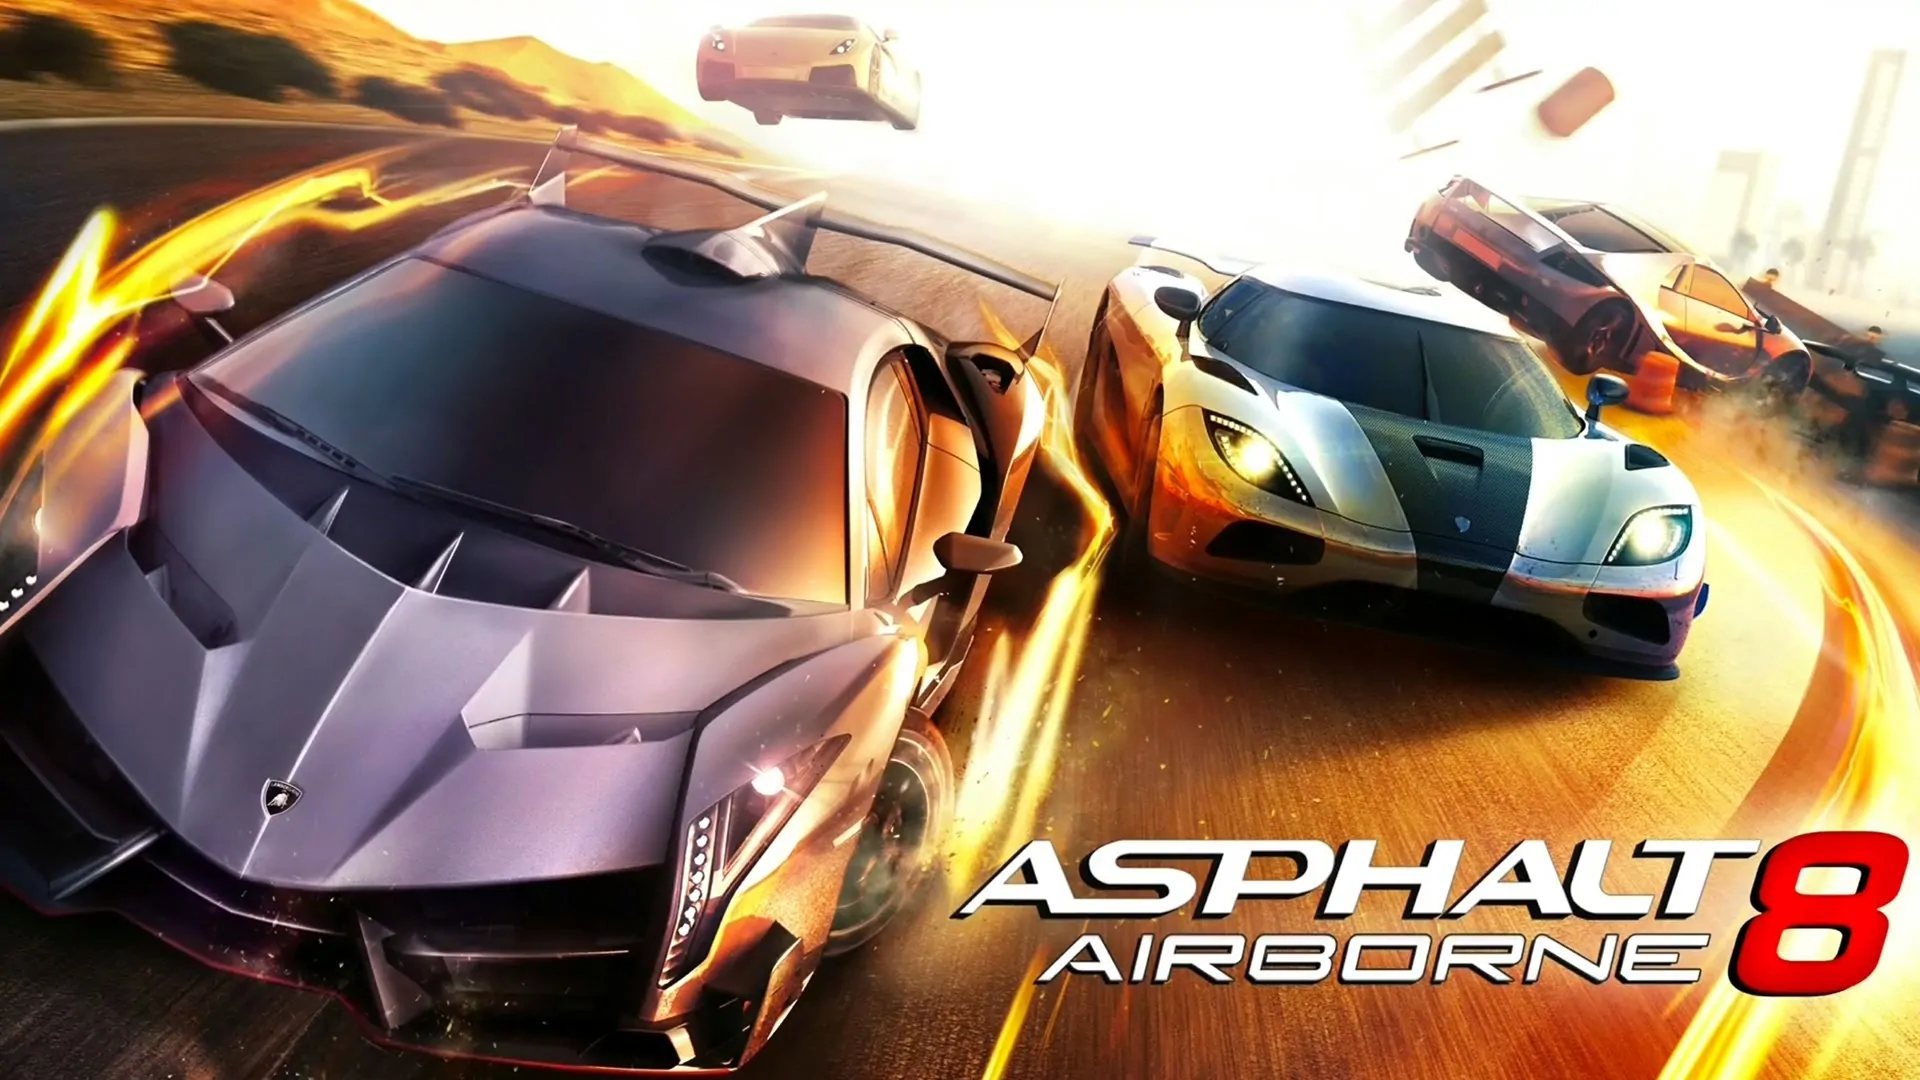 asphalt-airborne-8-apk-download-droidapk-org-7